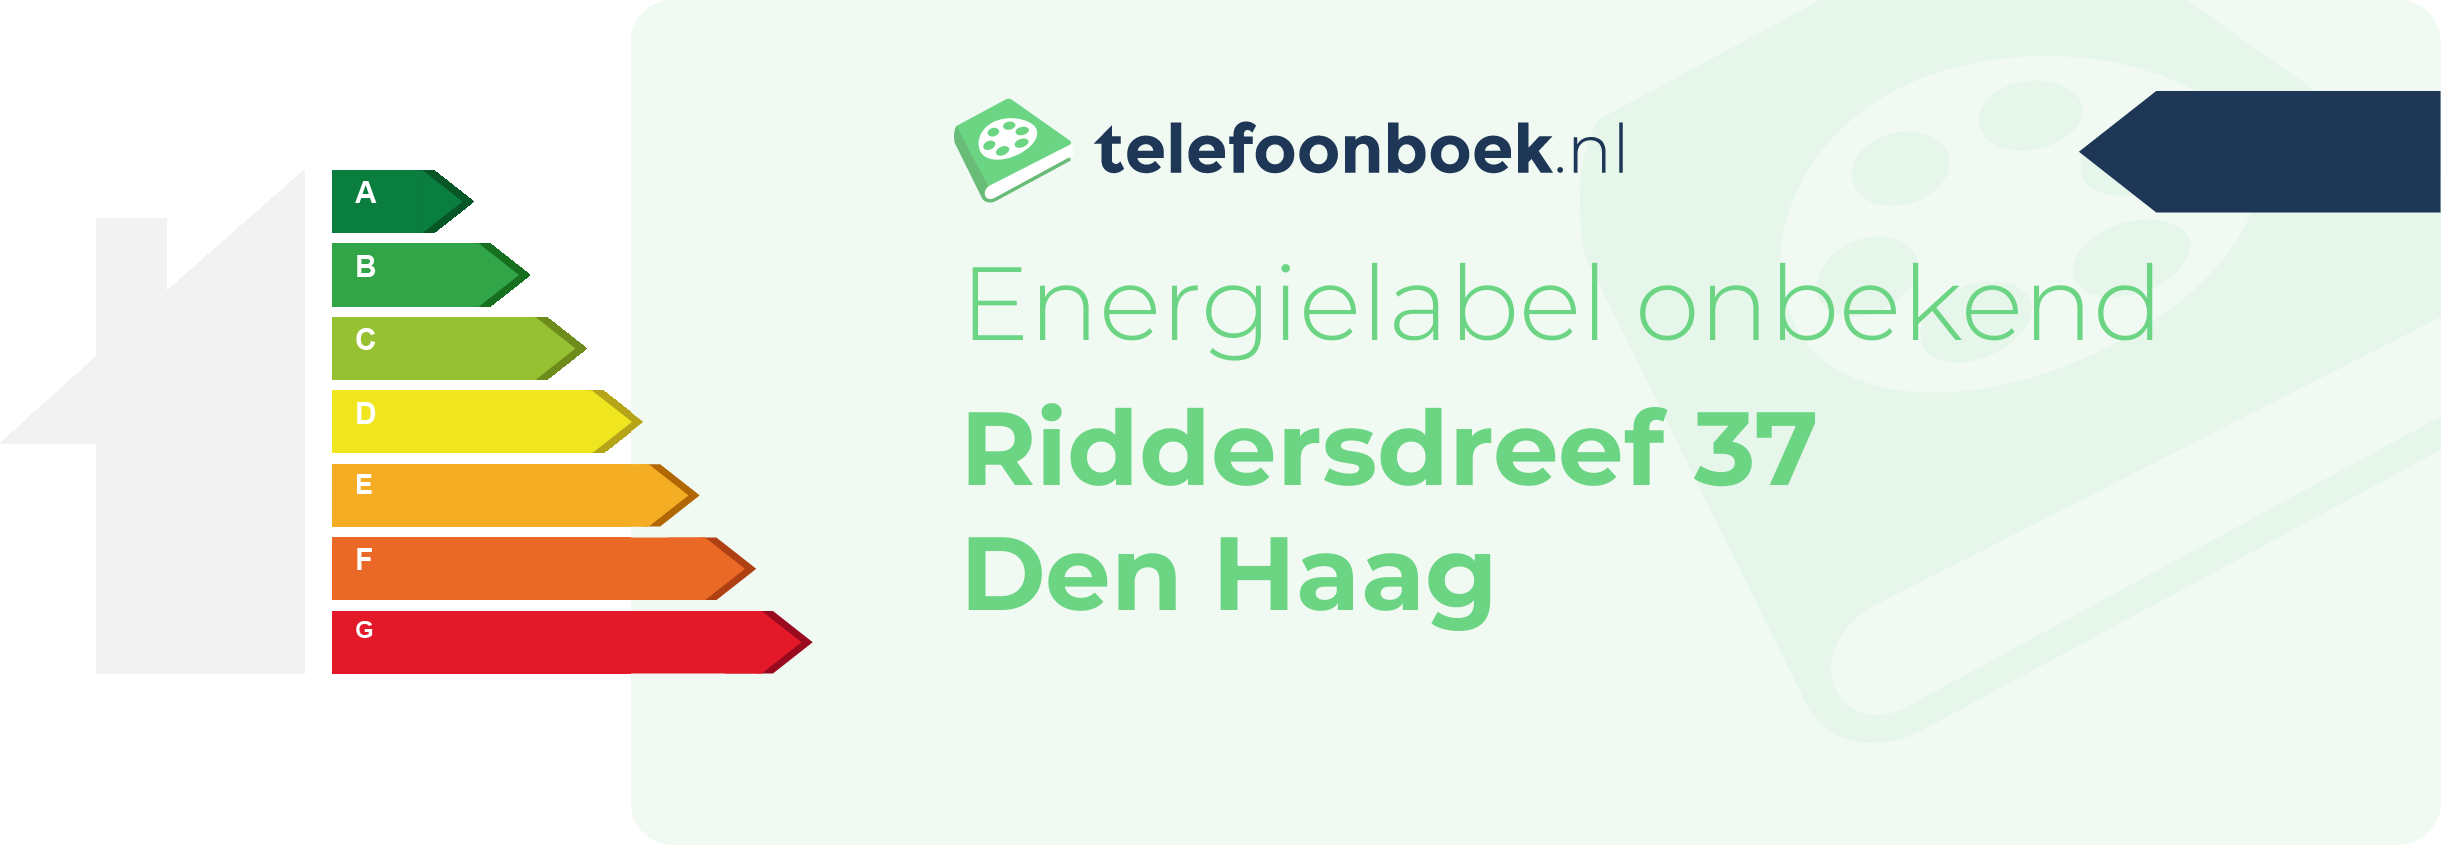 Energielabel Riddersdreef 37 Den Haag